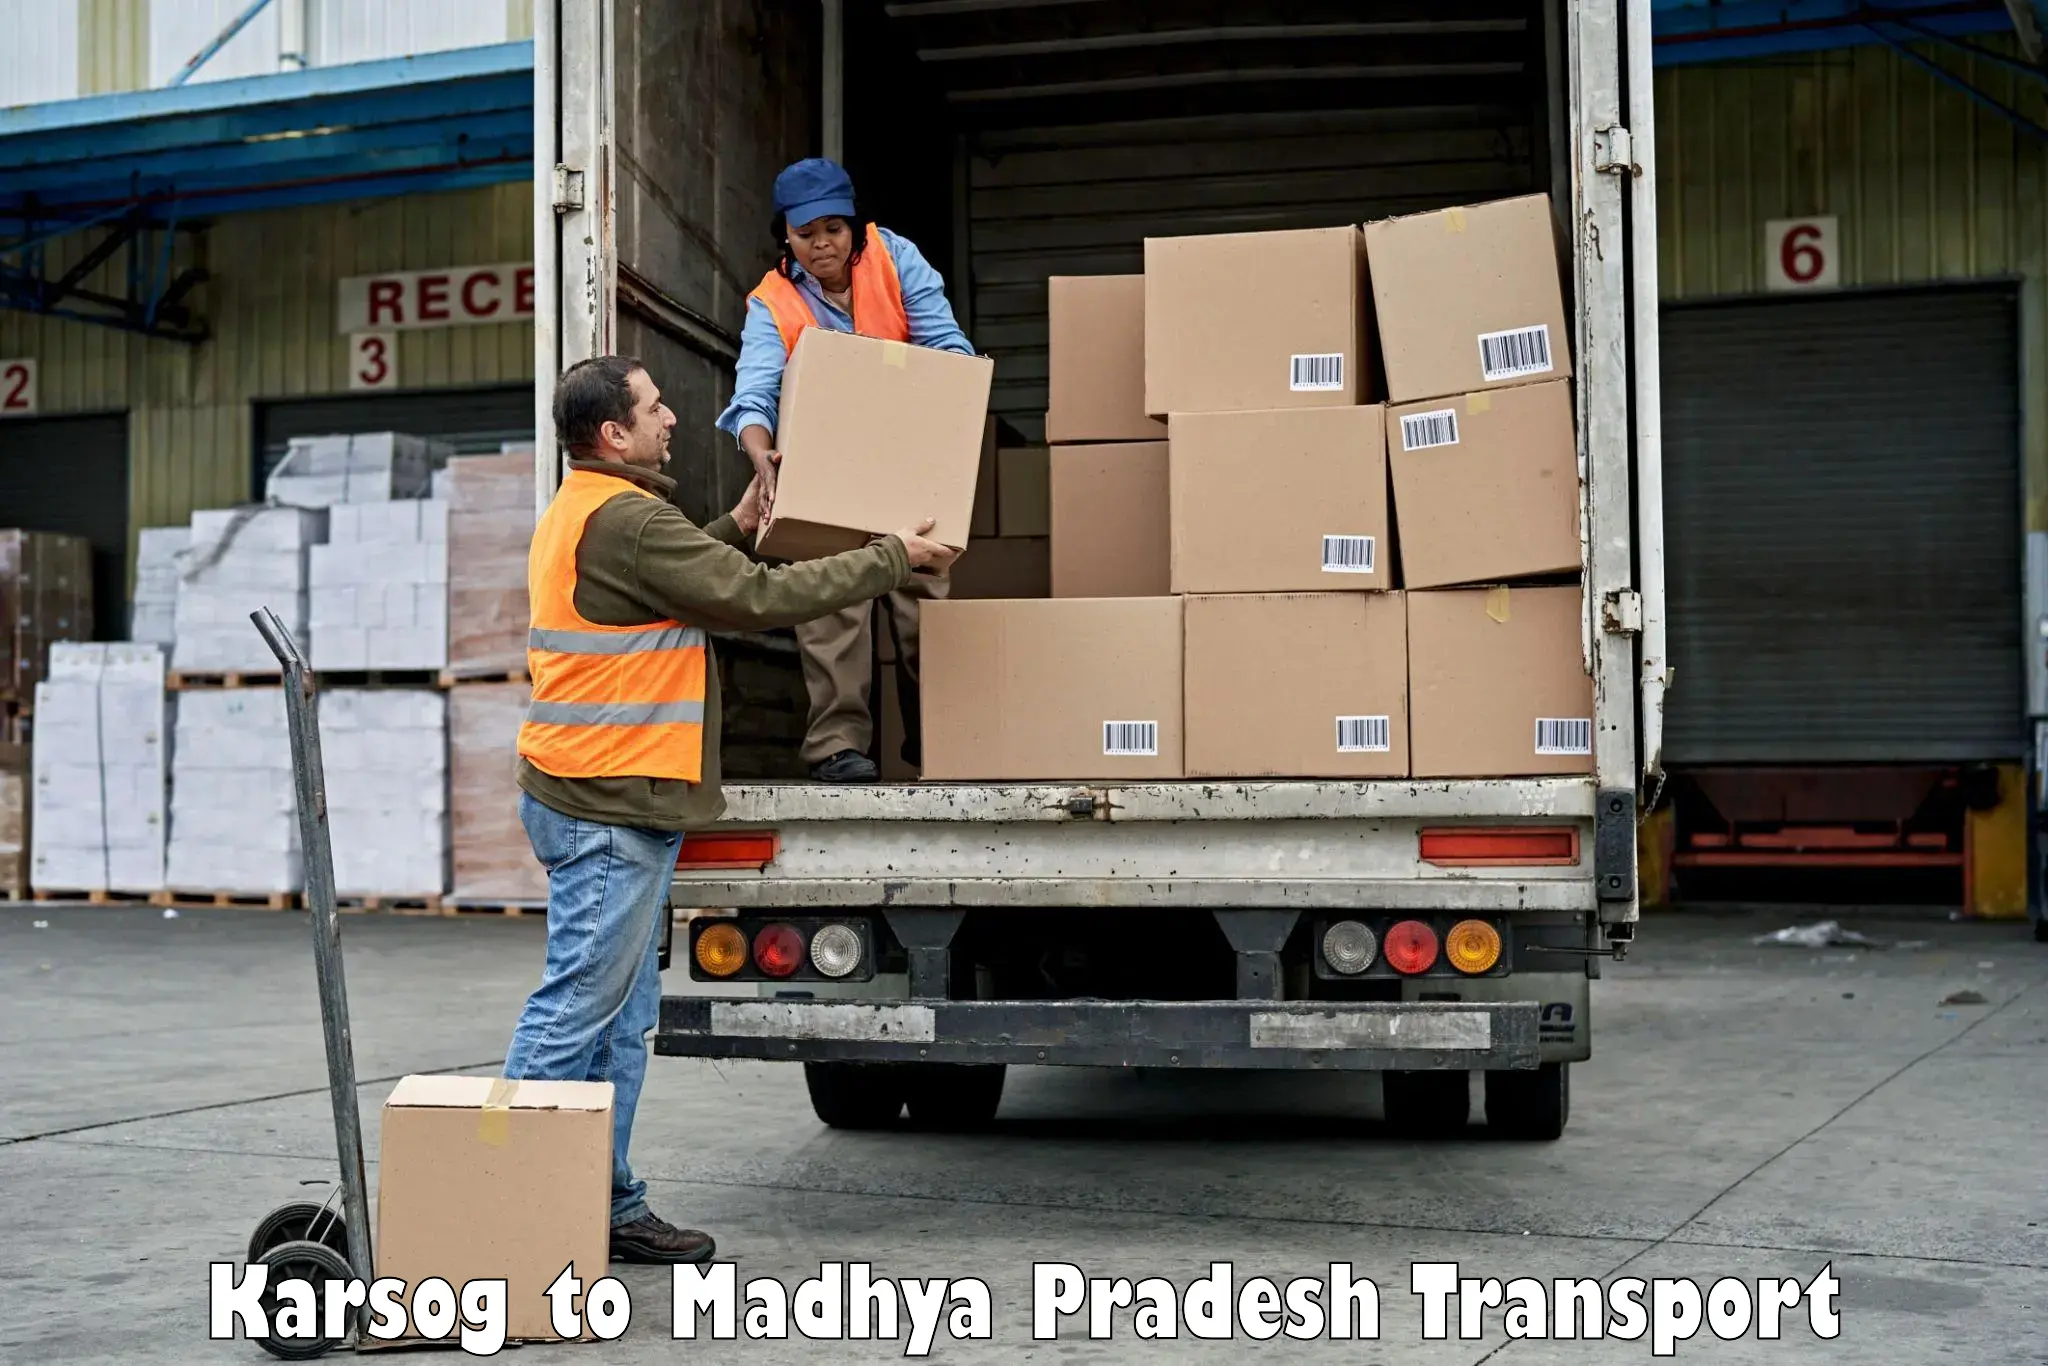 Truck transport companies in India Karsog to Chapda